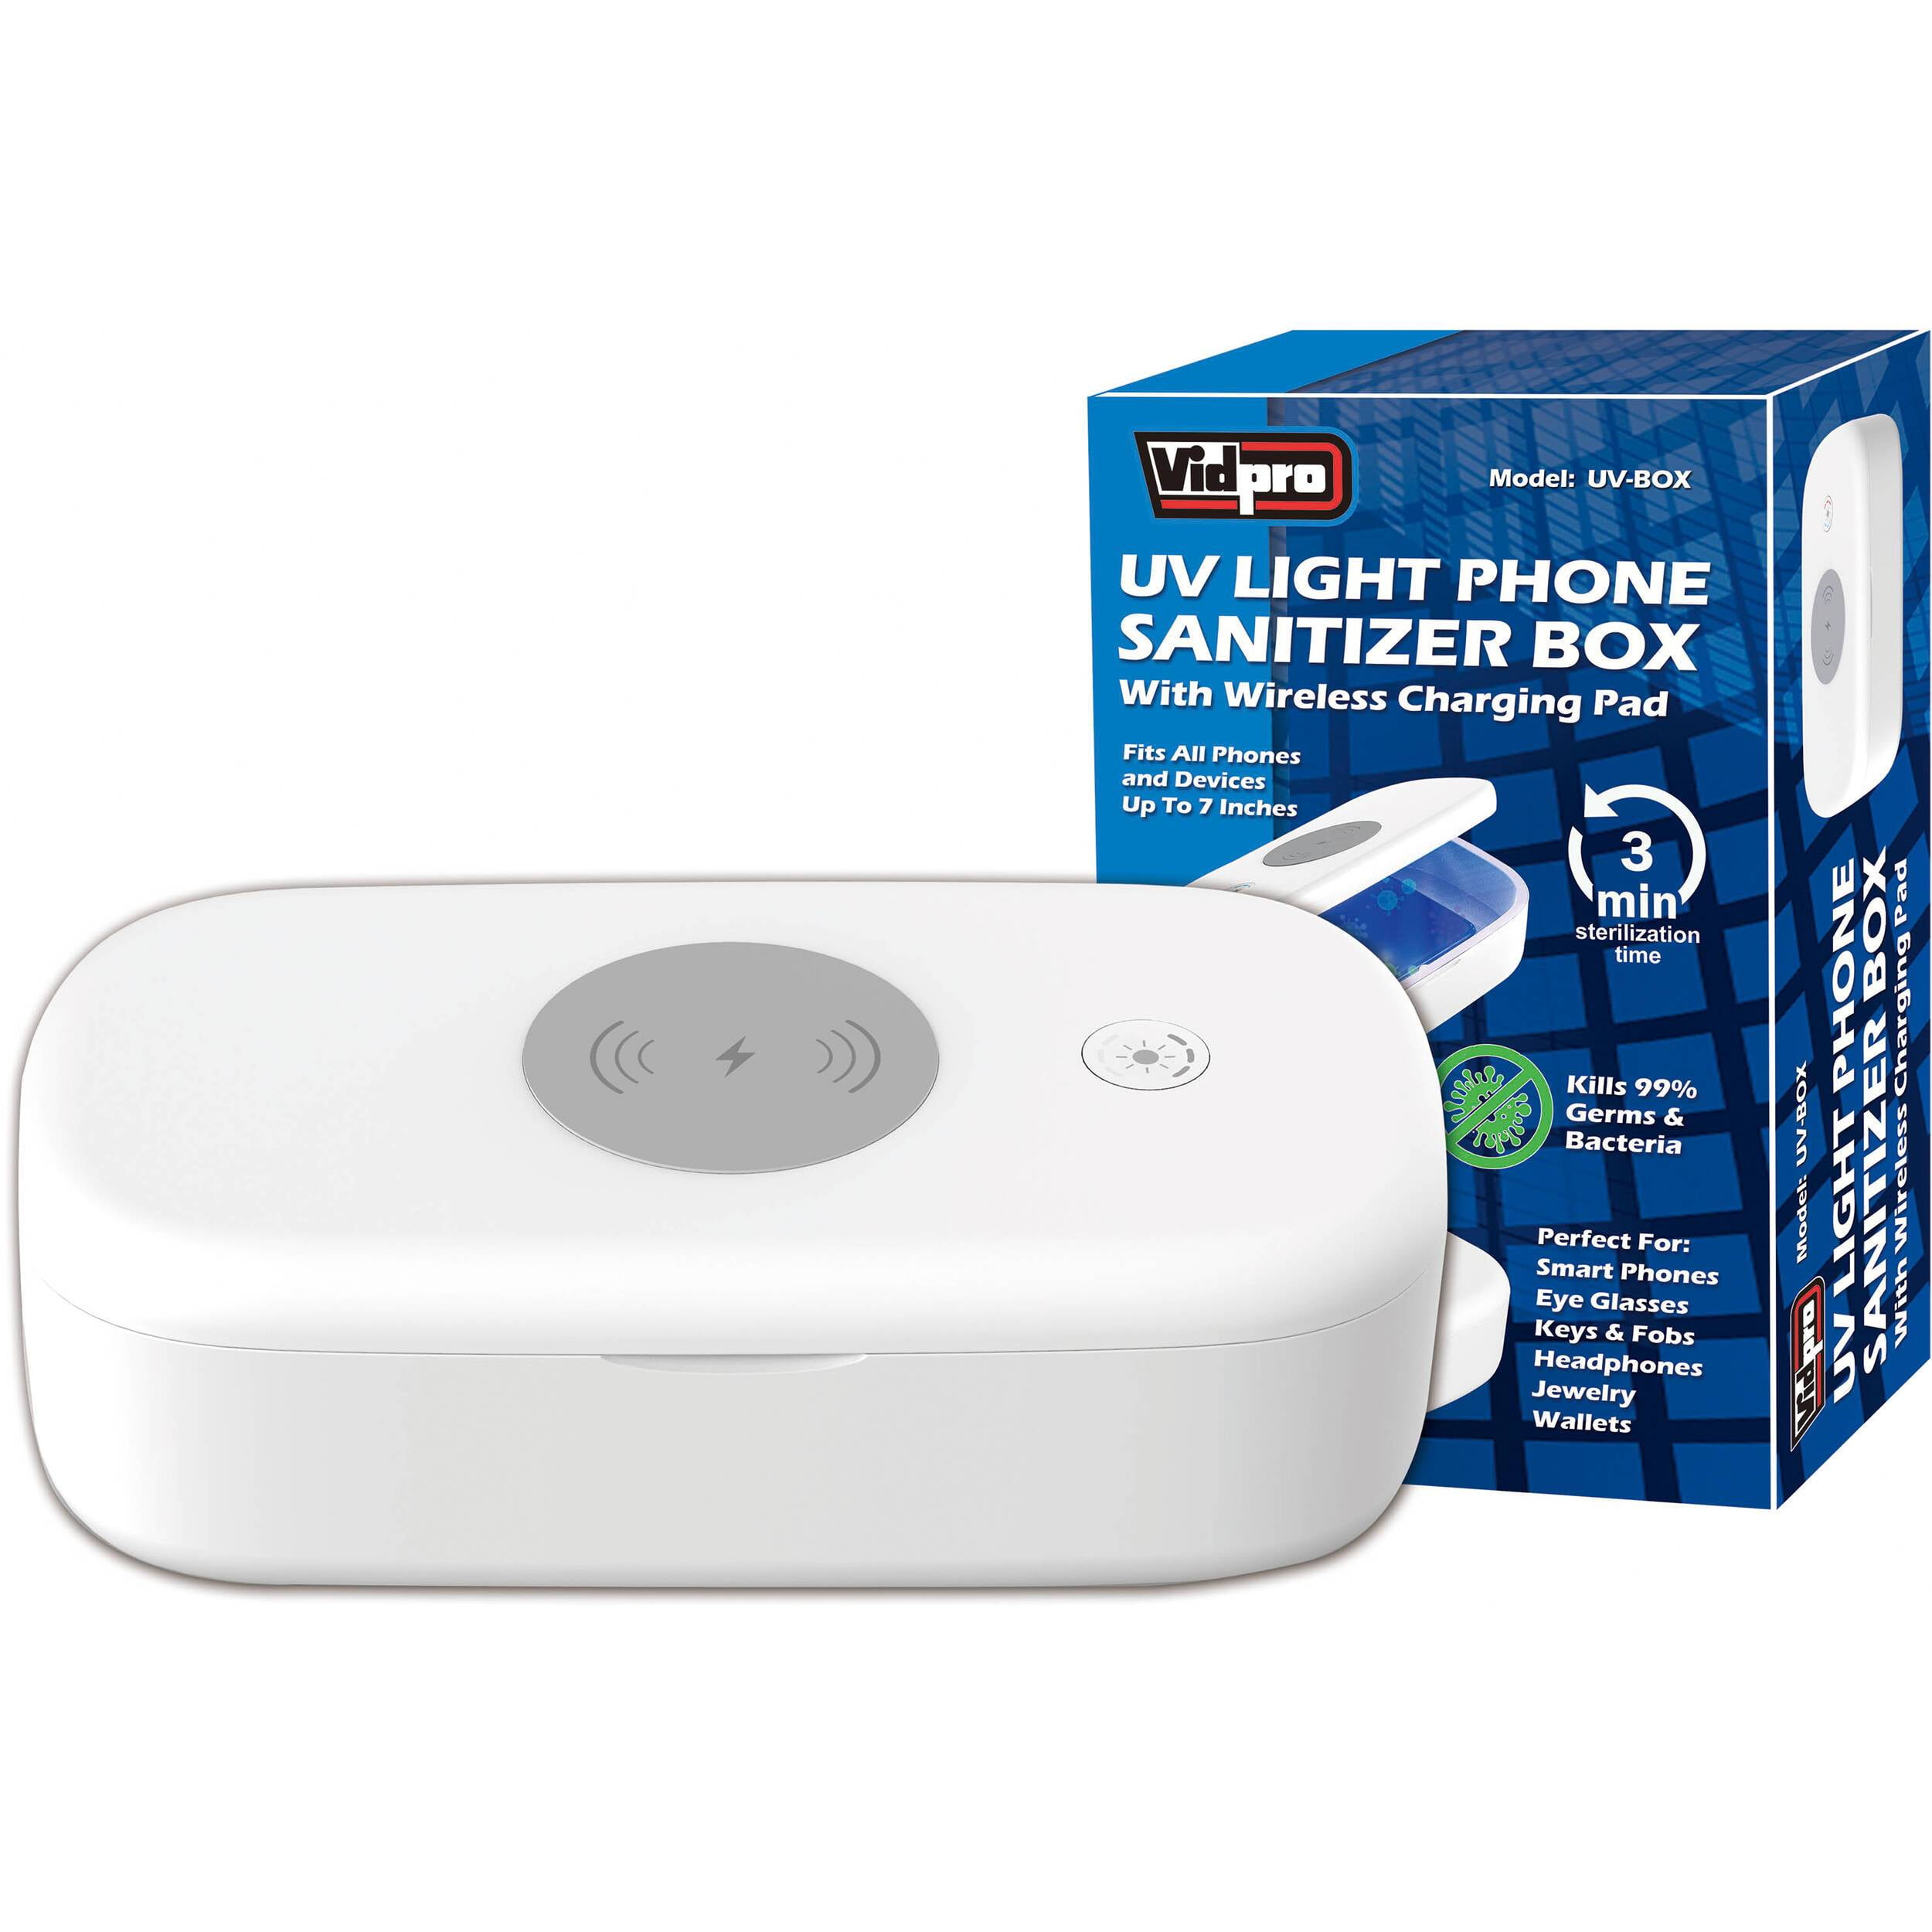  Doctor's Choice UV Sanitizer Box. Personal UV Sterilizer Box.  Extra Large UV Light Sanitizer Box fits Masks, Phones, Sleep Aid, Glasses,  Bottles, Toothbrush, Pacifier. : Health & Household